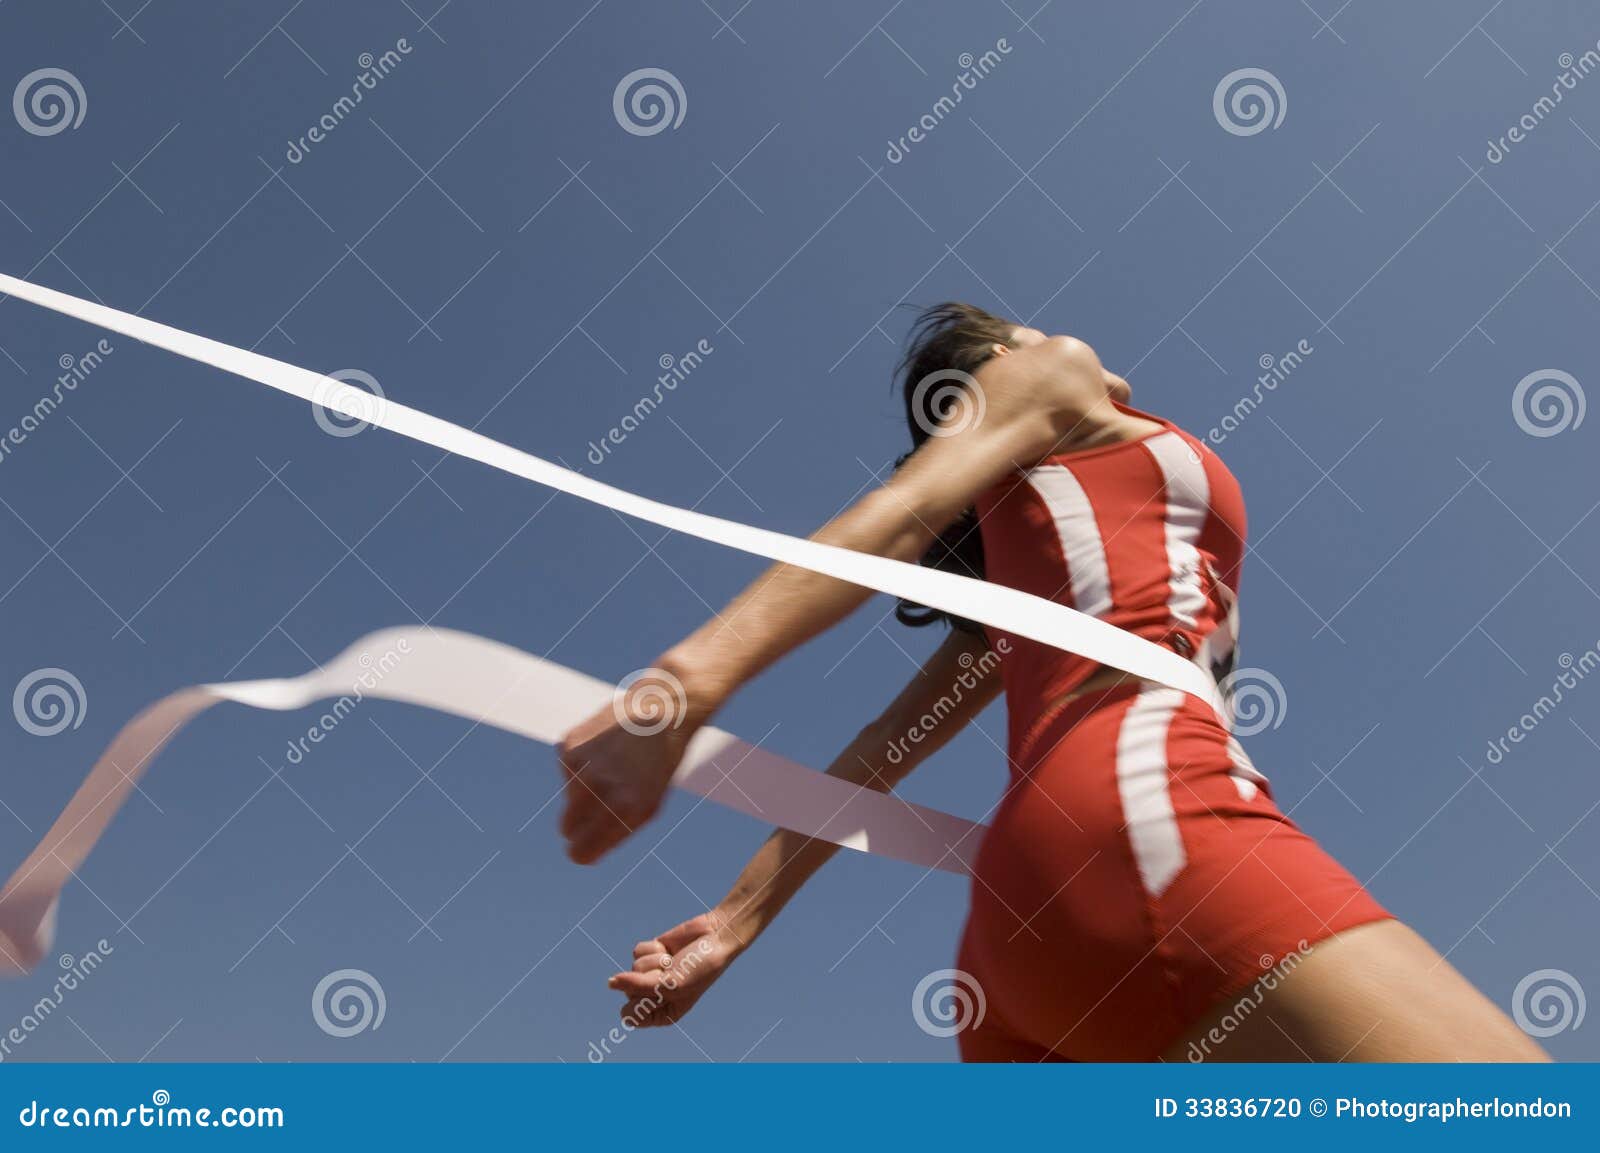 female athlete crossing finish line against blue sky